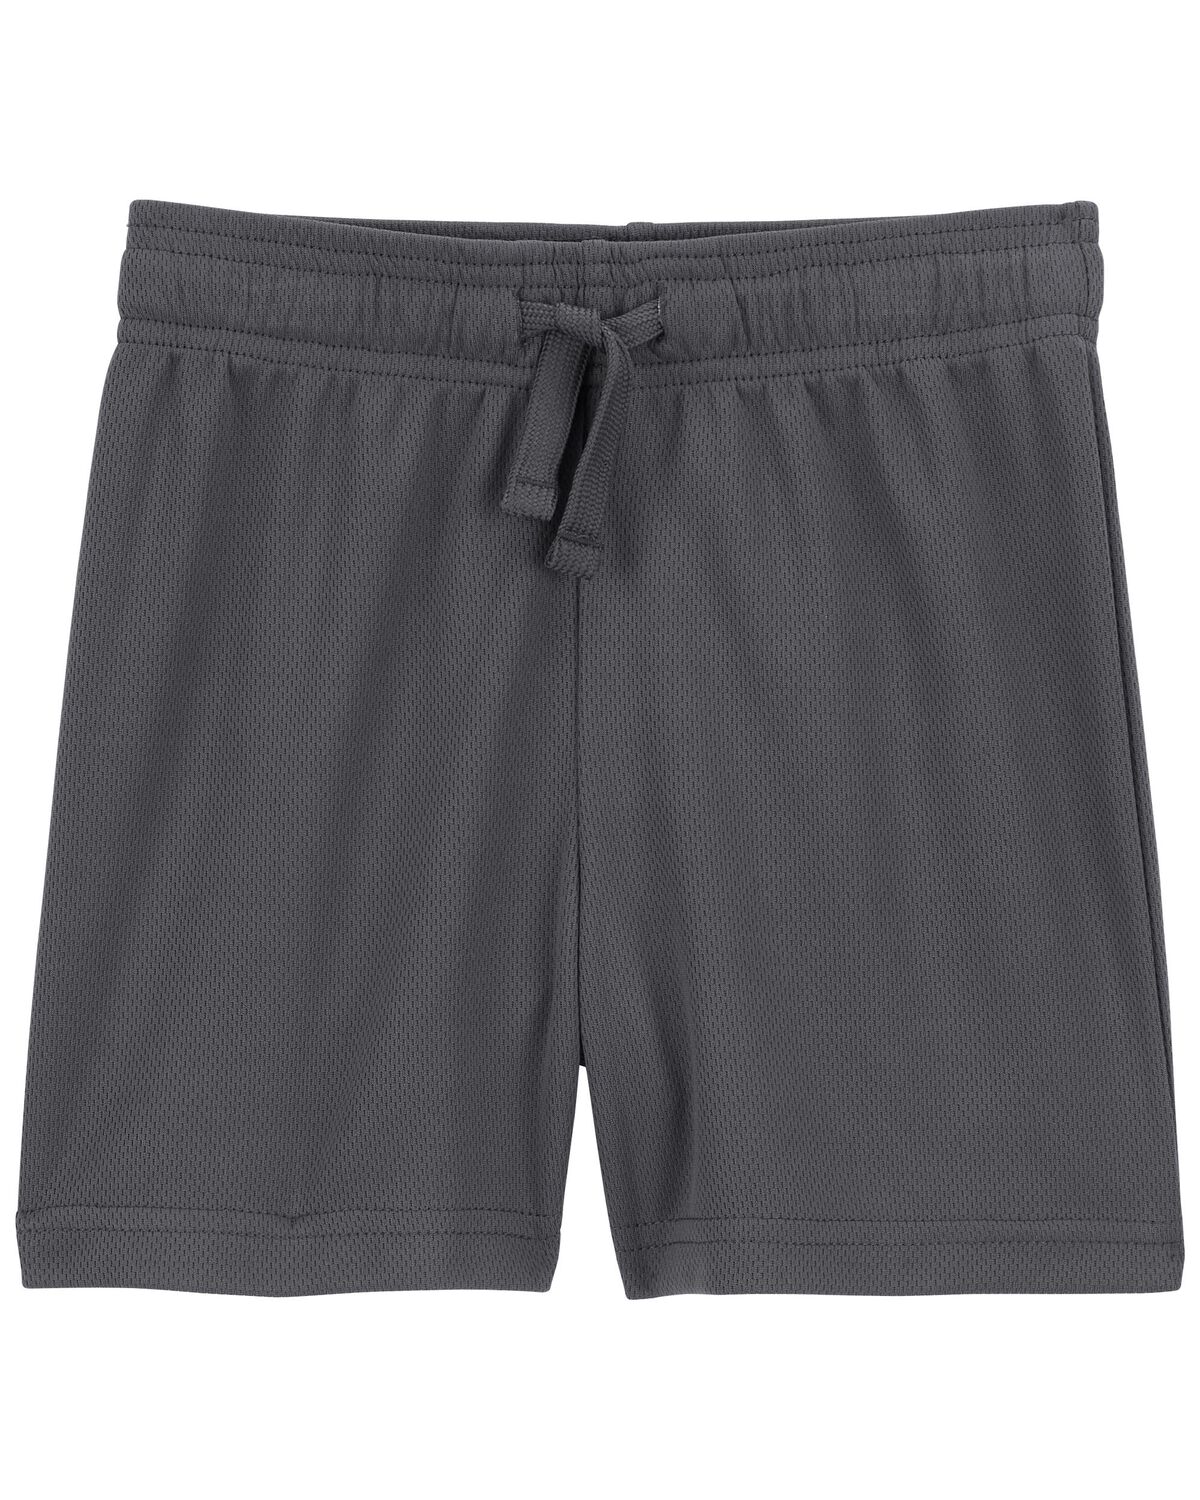 Grey Toddler Athletic Mesh Shorts | carters.com